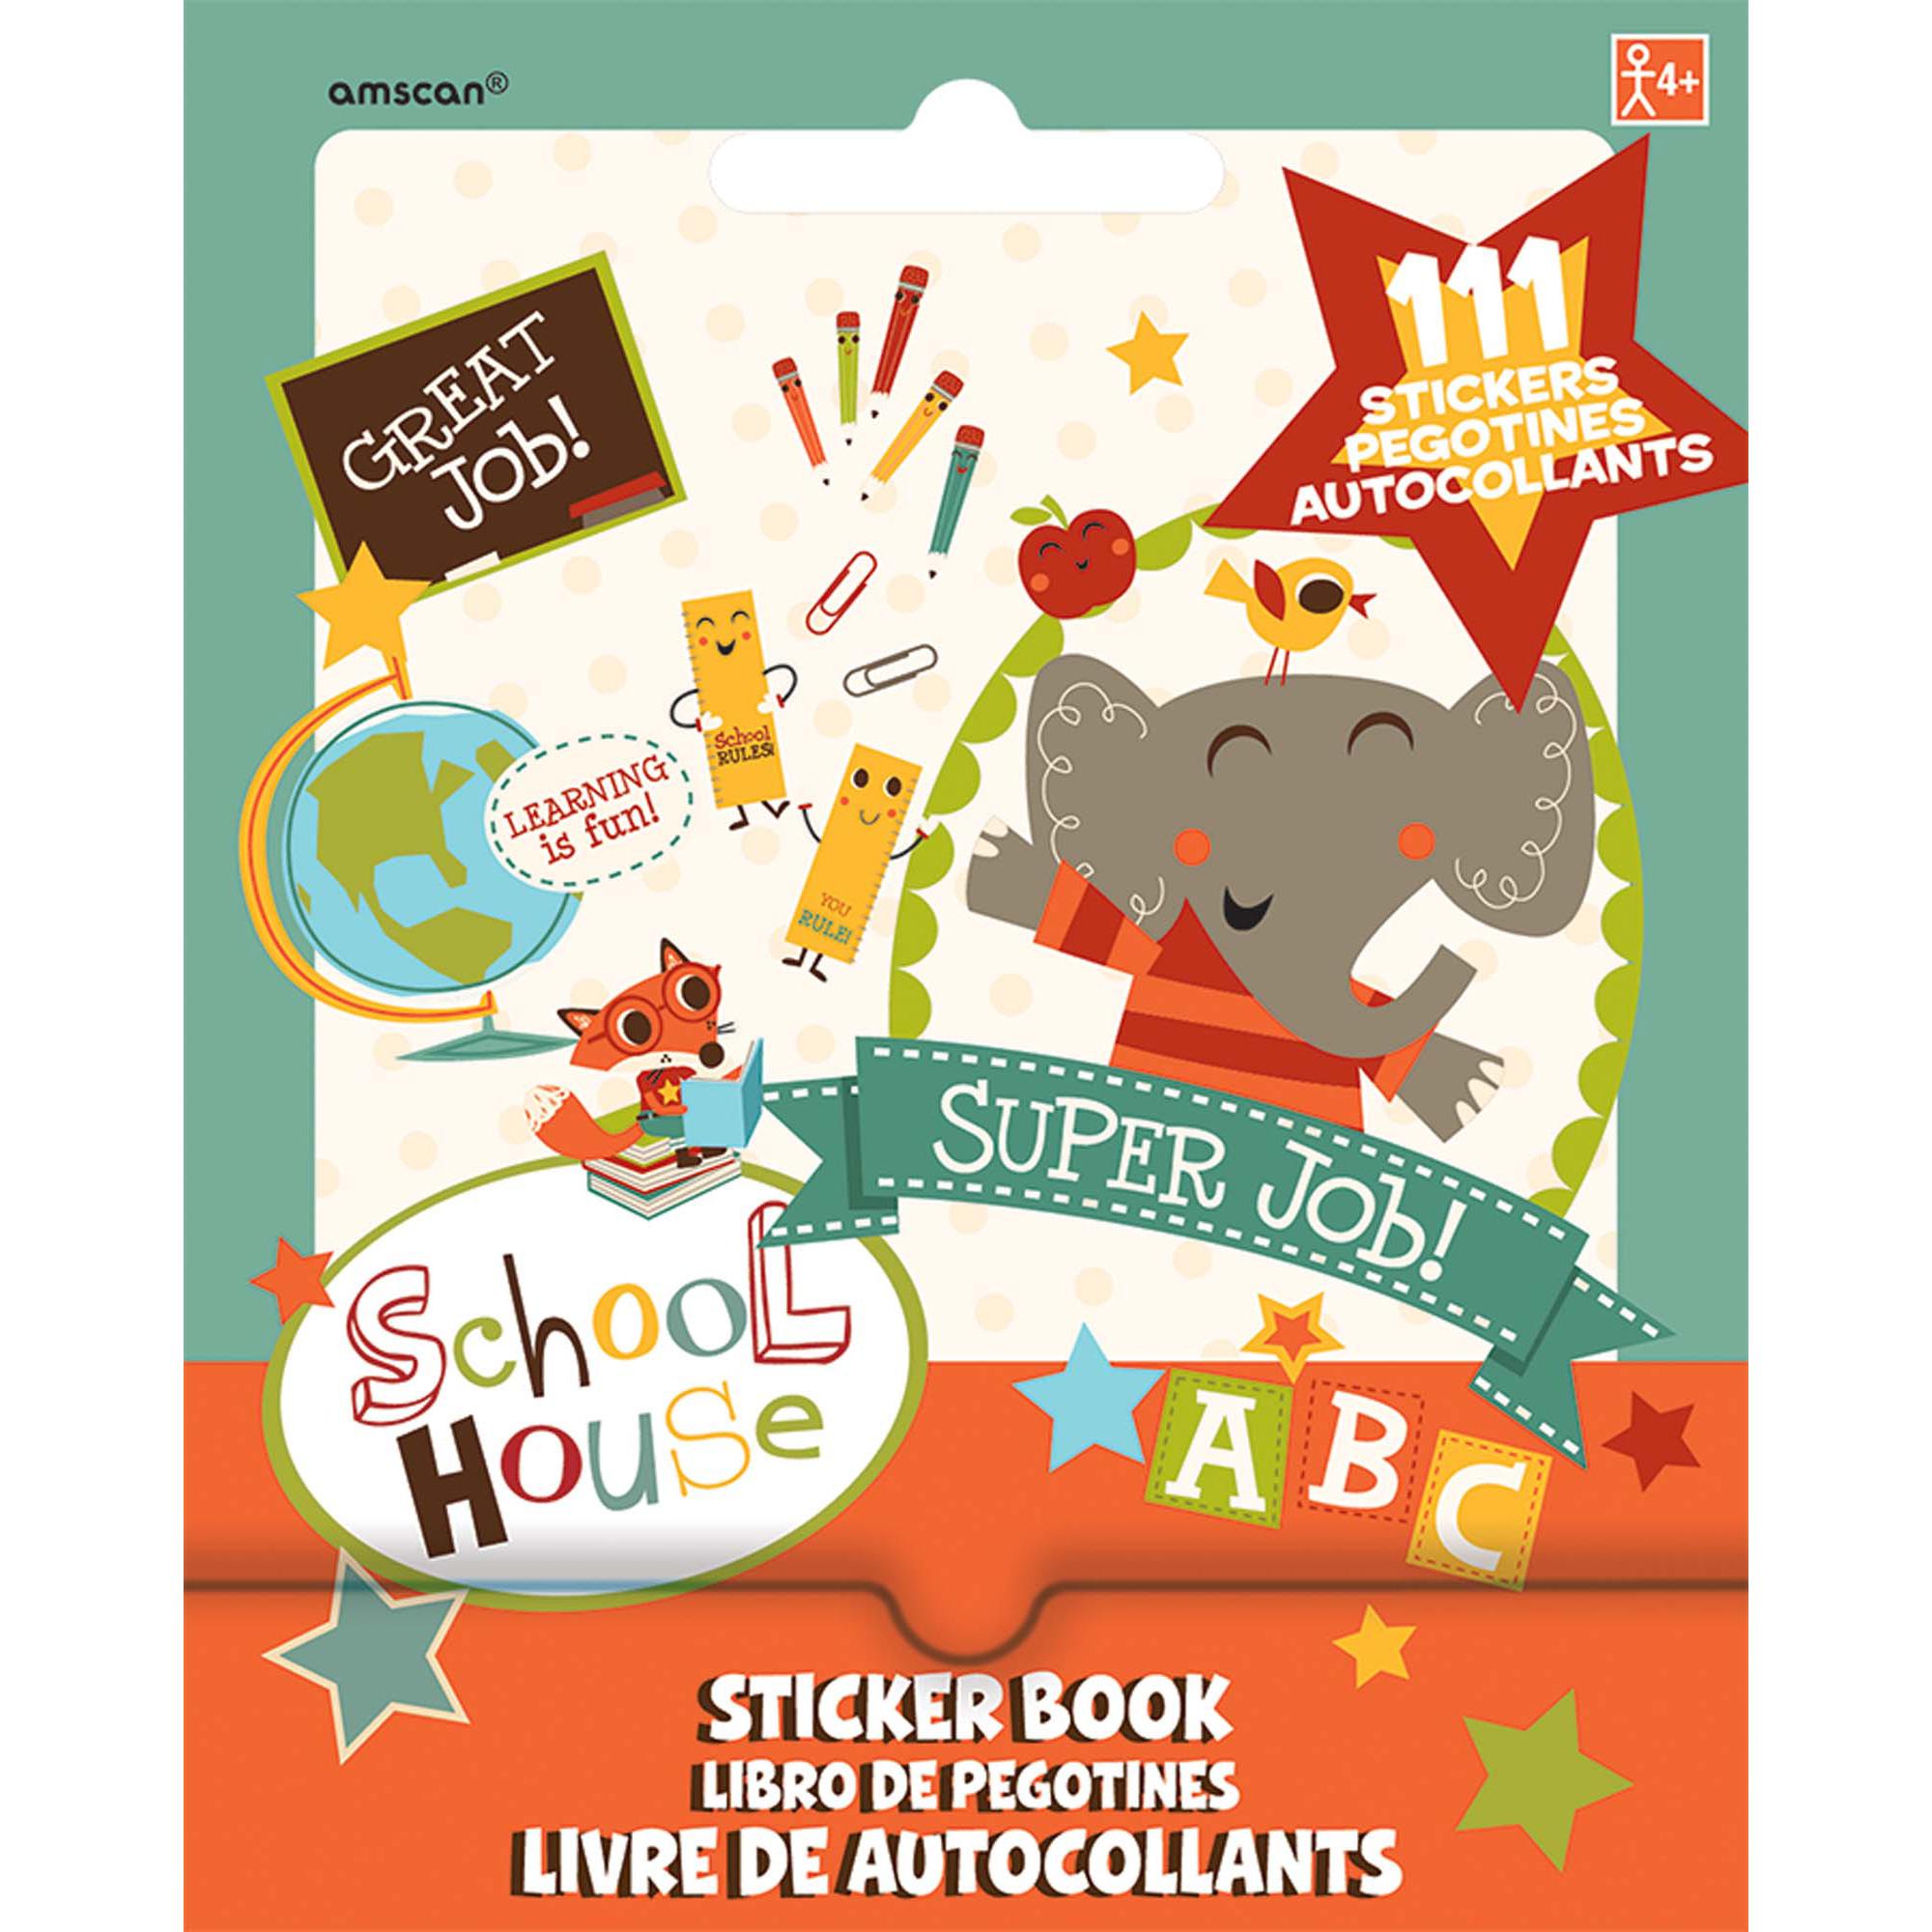 Schoolhouse Sticker Booklet Party Favors - Party Centre